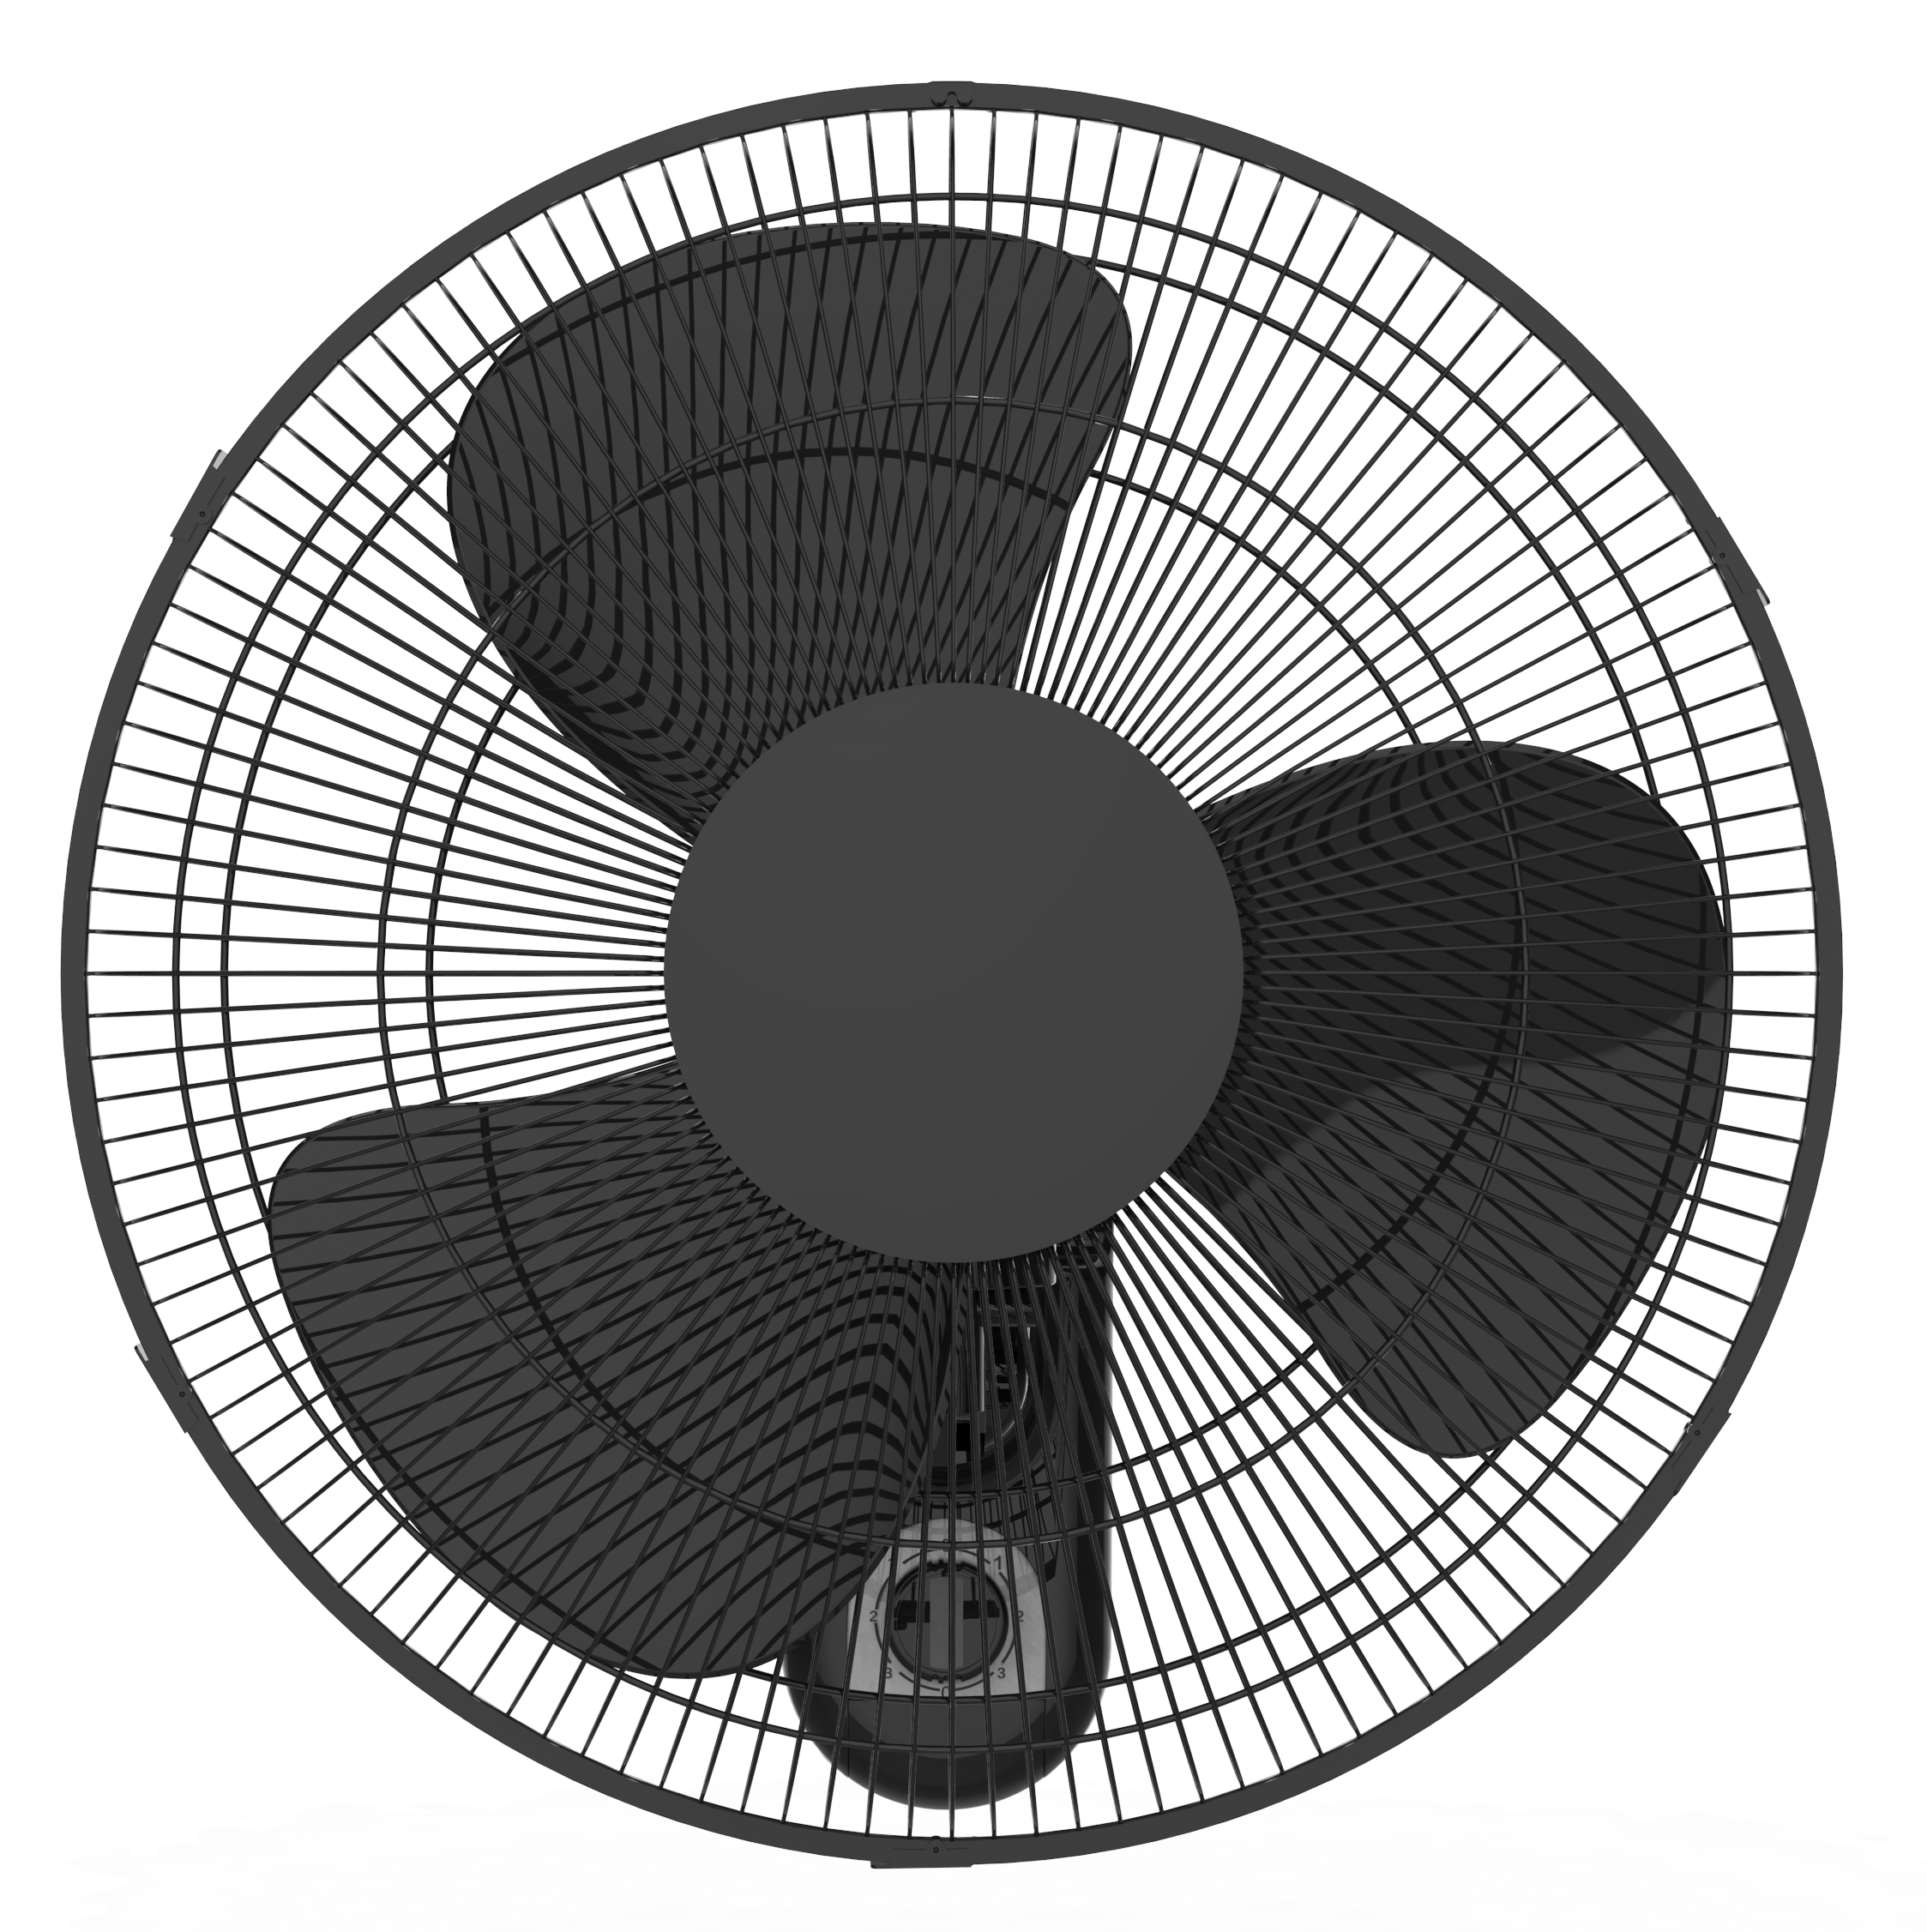 Pelonis 16" 3-Speed Oscillating Wall Mount Fan, FW40-F3B, New, Black - image 4 of 7